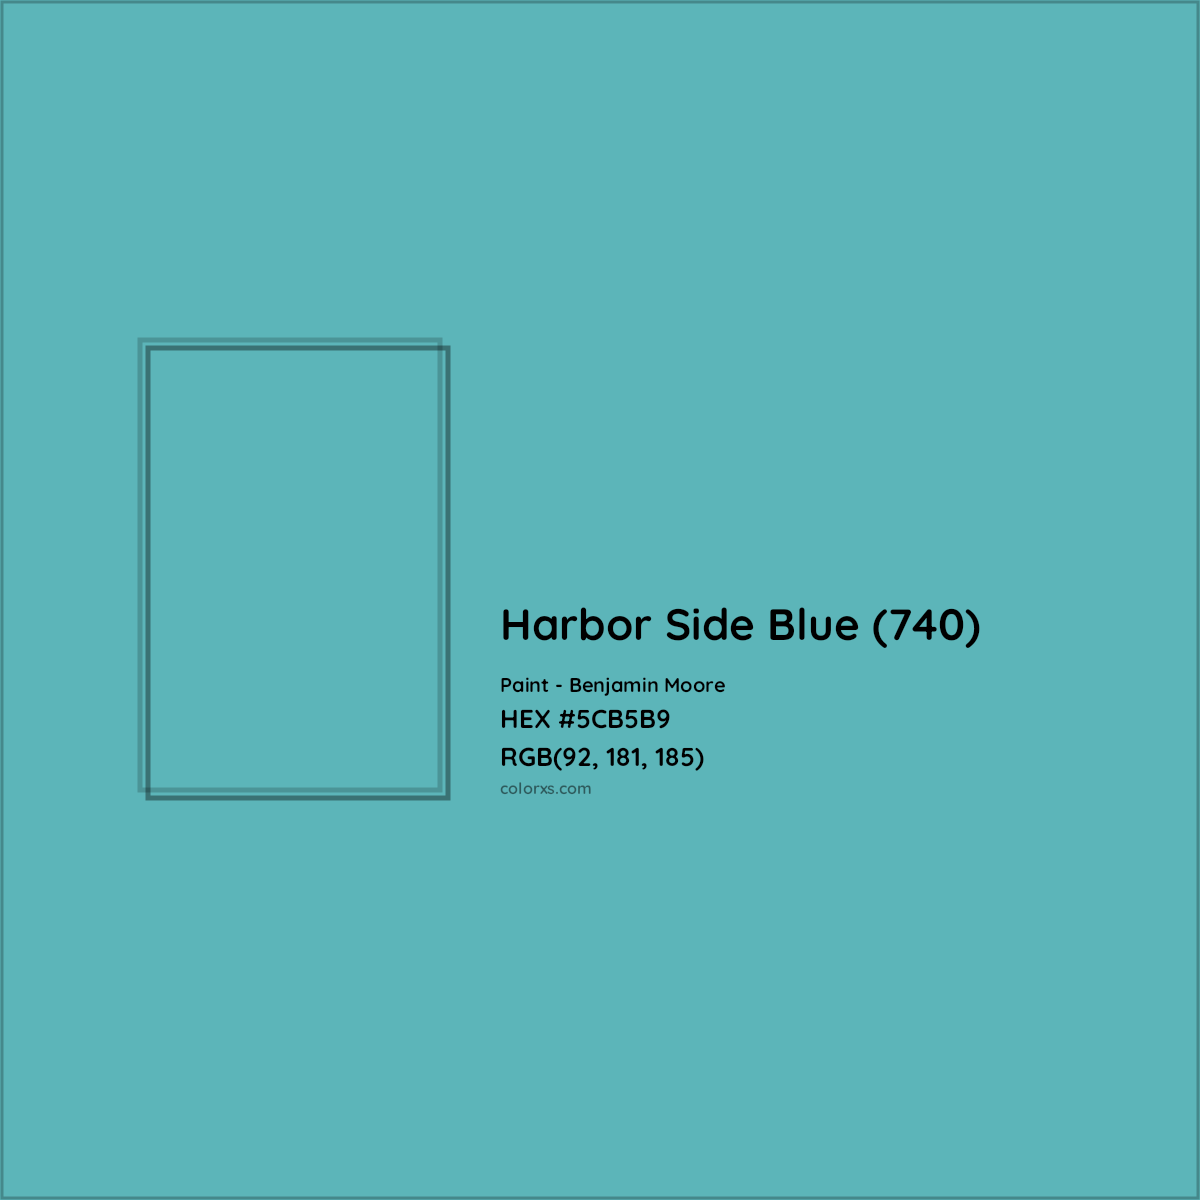 HEX #5CB5B9 Harbor Side Blue (740) Paint Benjamin Moore - Color Code